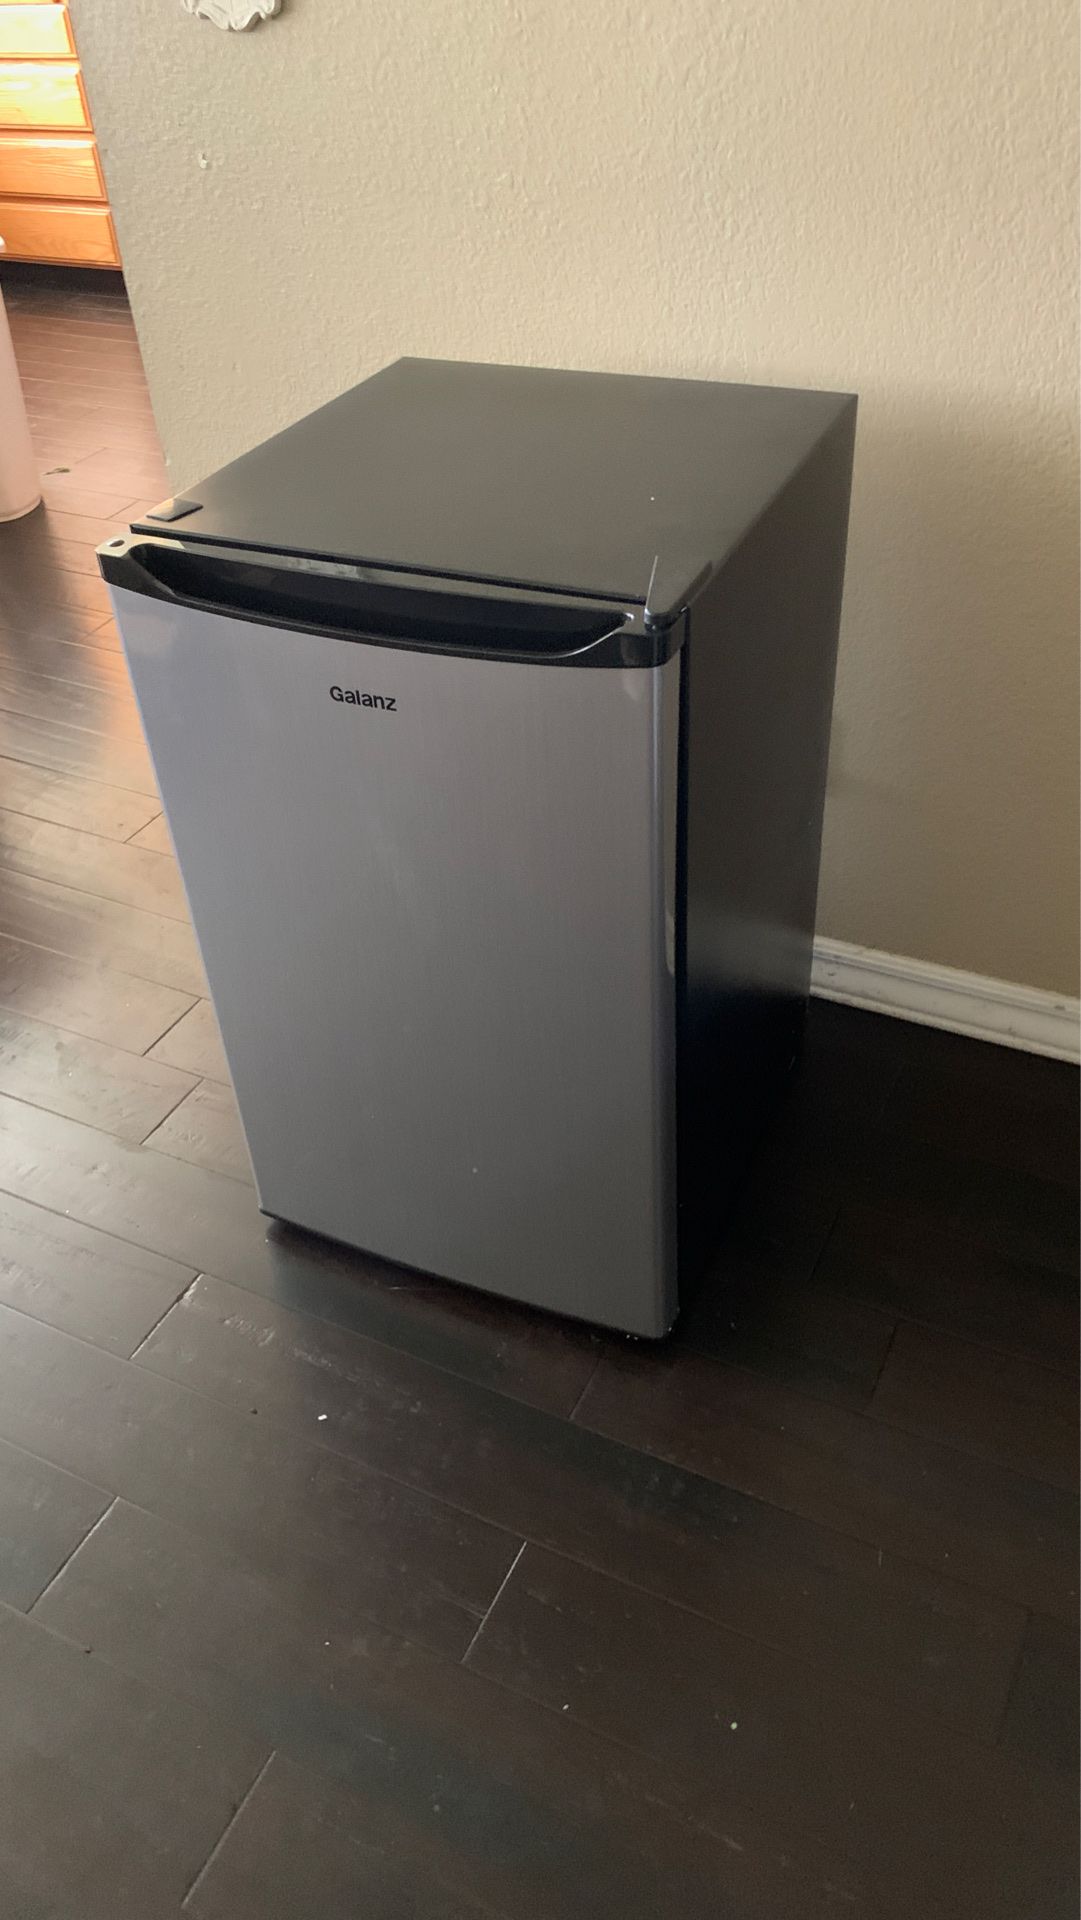 Galanz 4.3 CU. FT Refrigerator